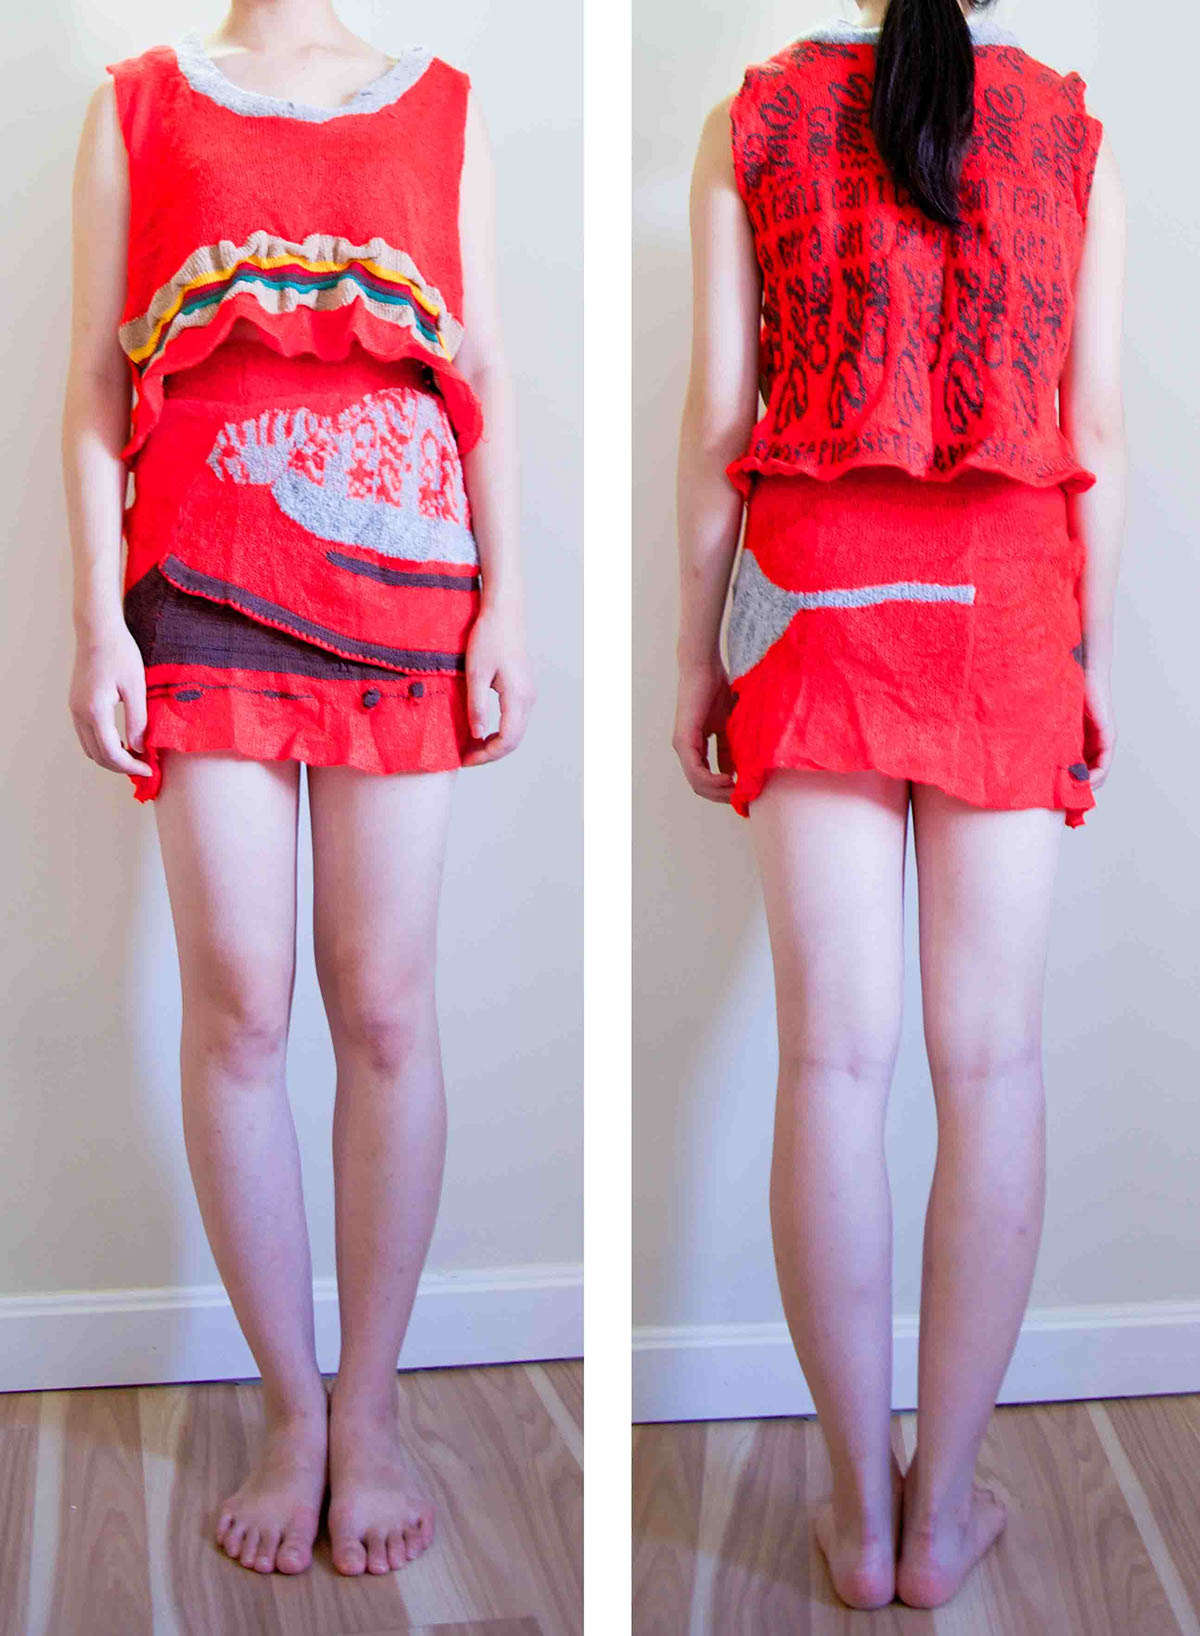 Food  diet coke coke burger twizzler foodinspired stomach pattern knitwear knit skirt top outfit croptop